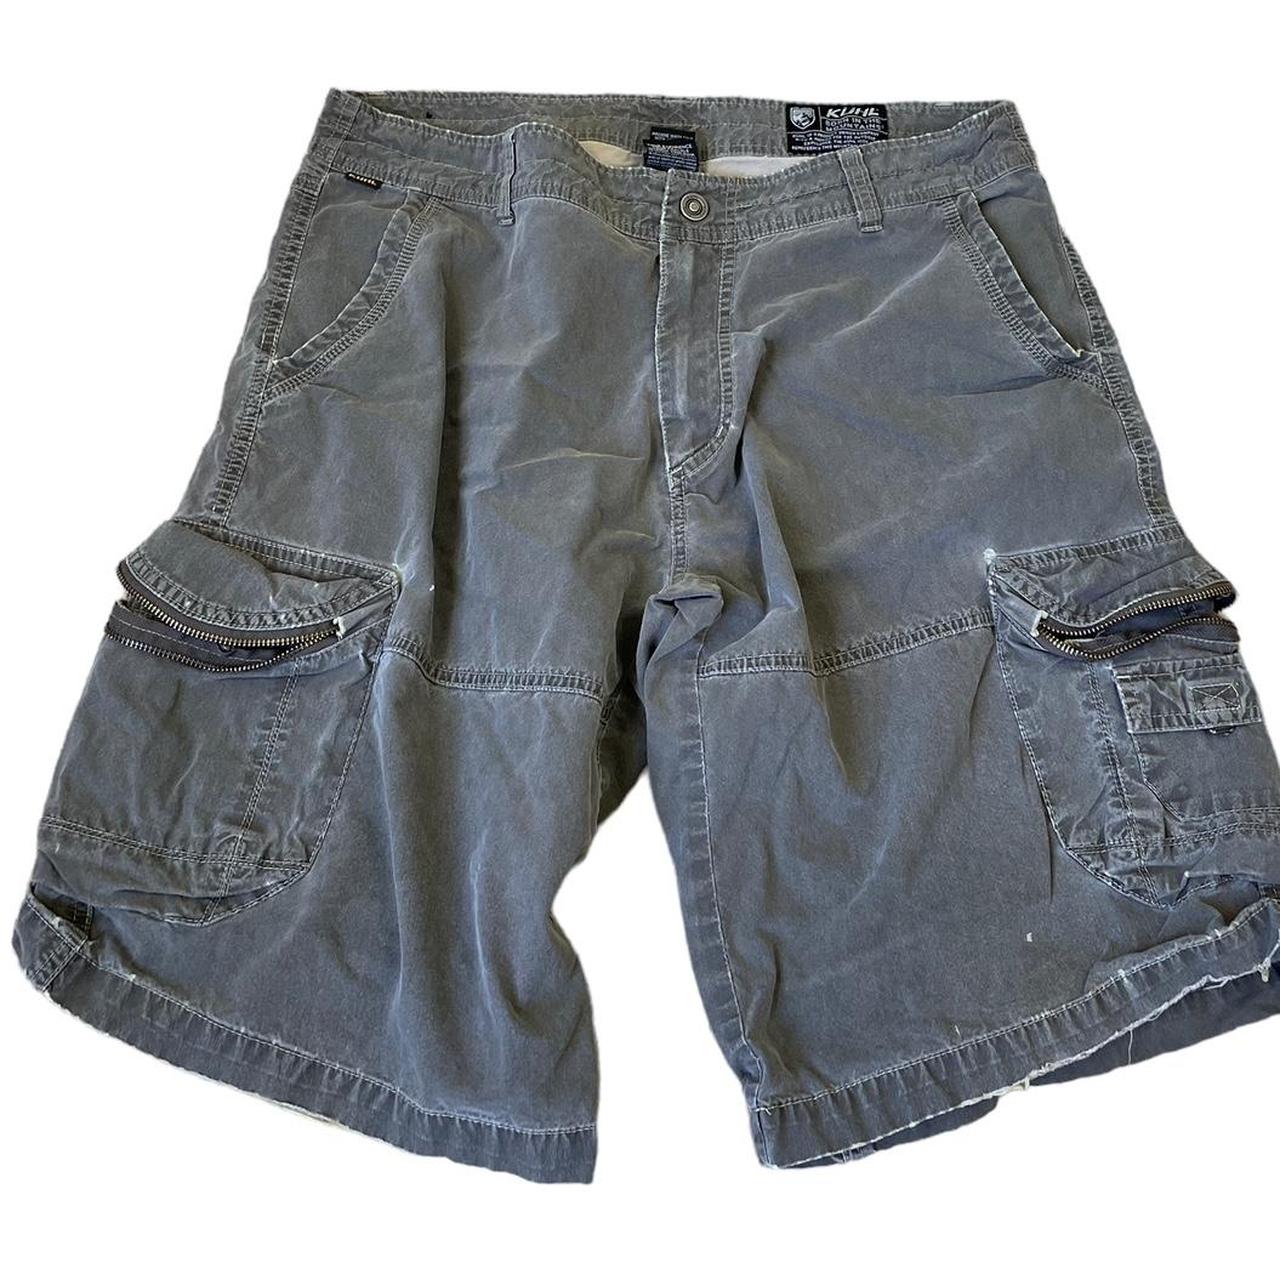 Kuhl Shorts Men's 36x12 Gray Vintage Patinadye... - Depop